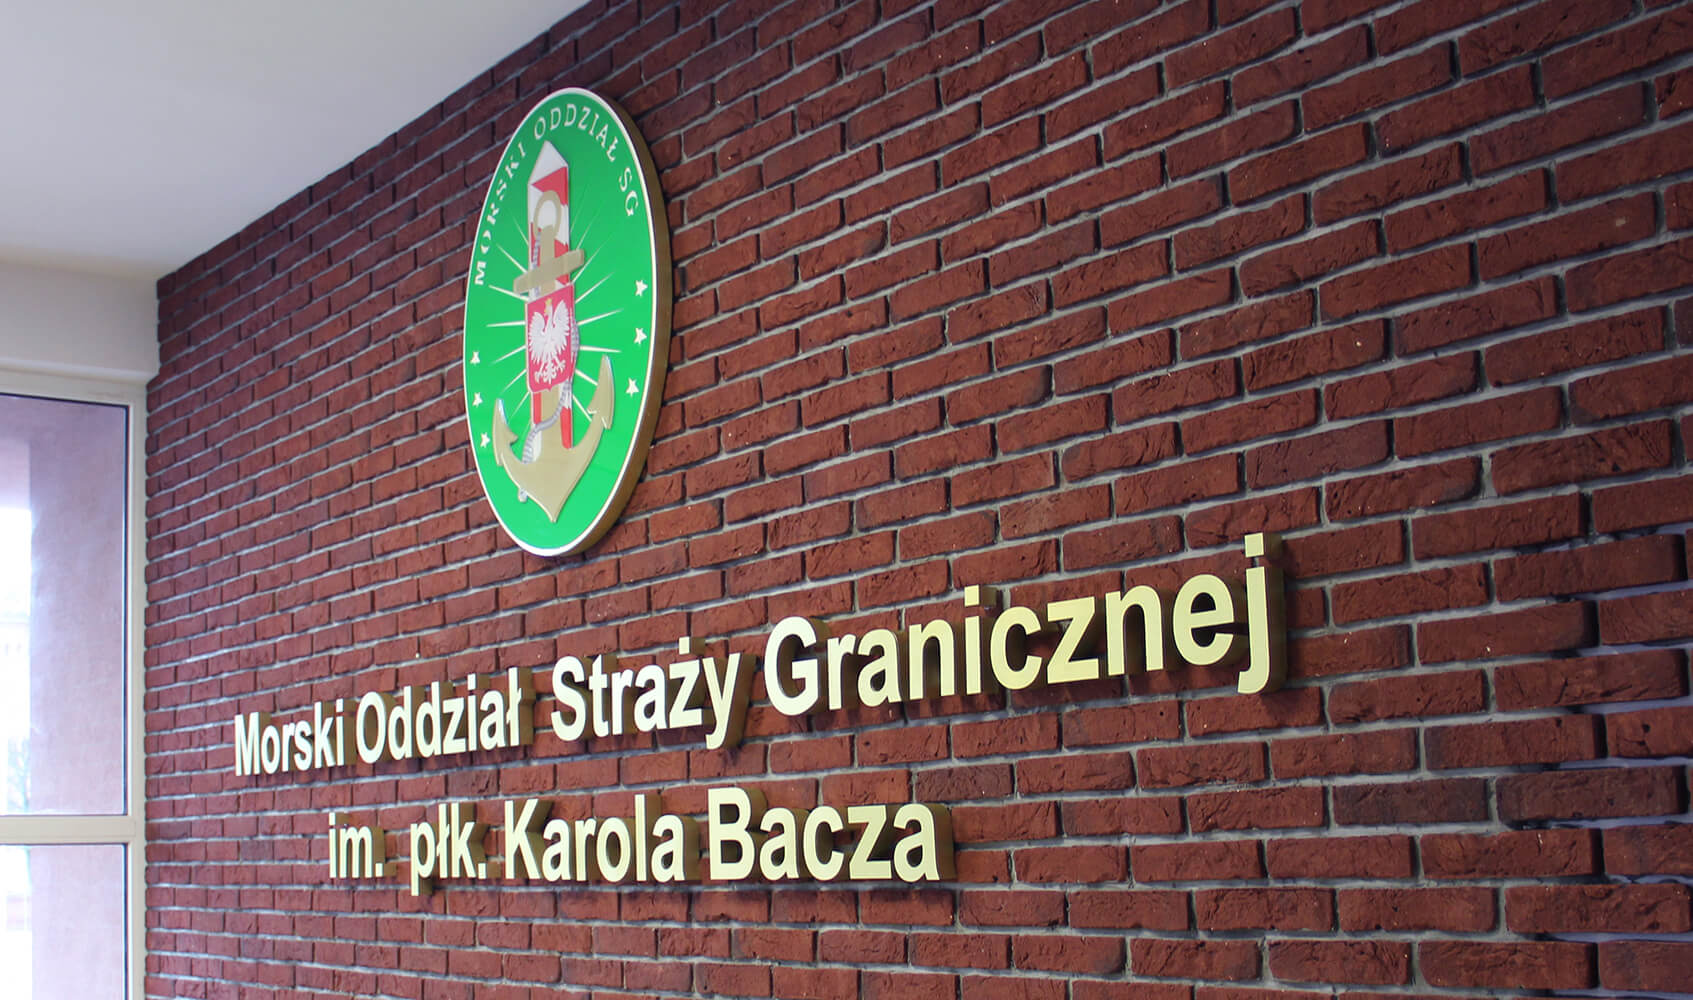 MaritimeBranch Guard Graniczna - Morski Oddział Straży Granicznej (Border Guard Sea Branch) - building signage, logo and styrodur letters placed on the brick wall